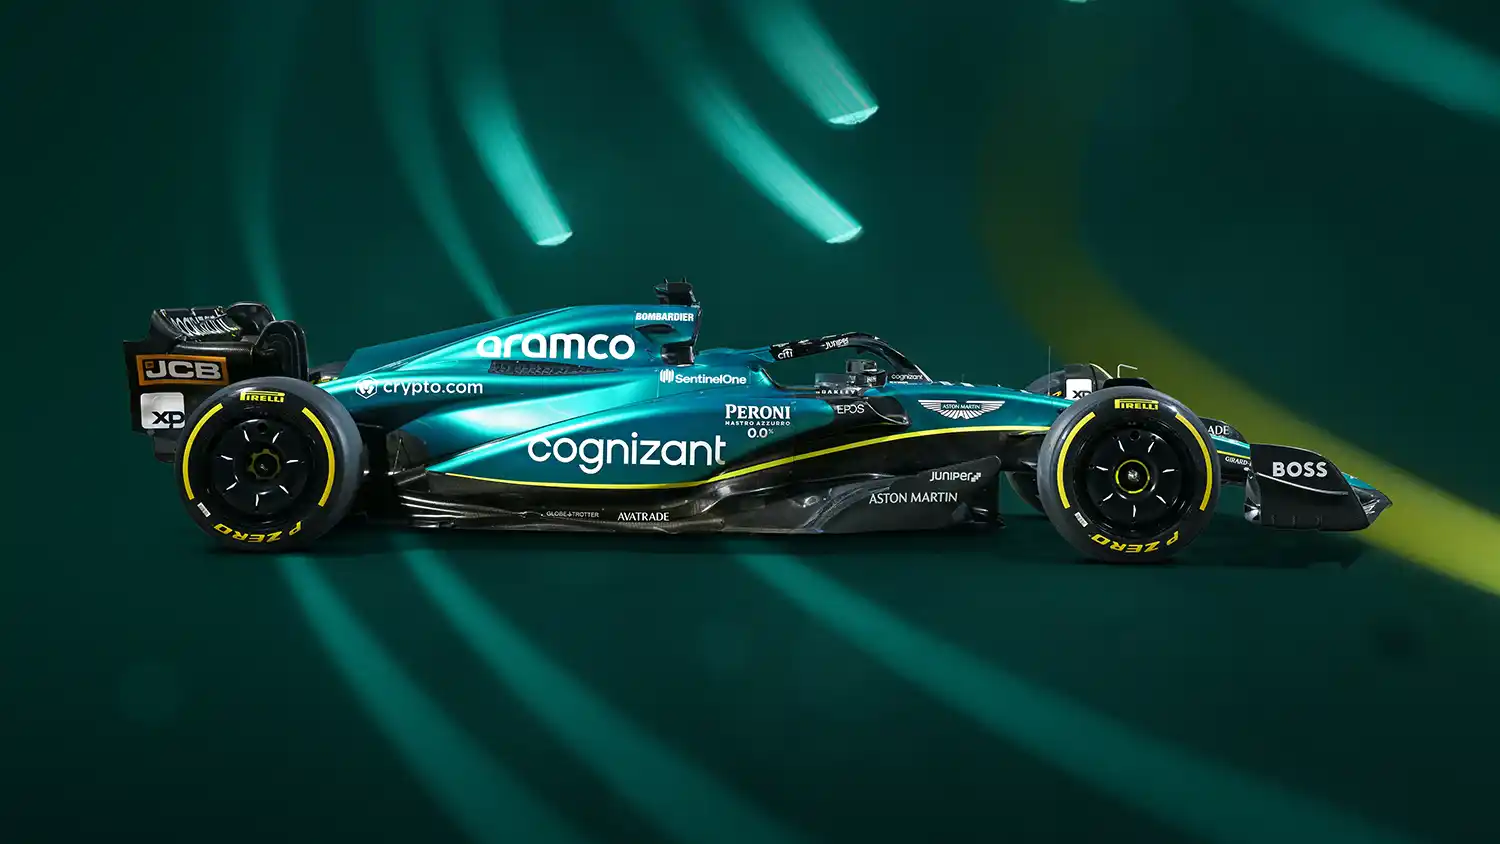 Aston Martin incorporates Aramco into F1 team name